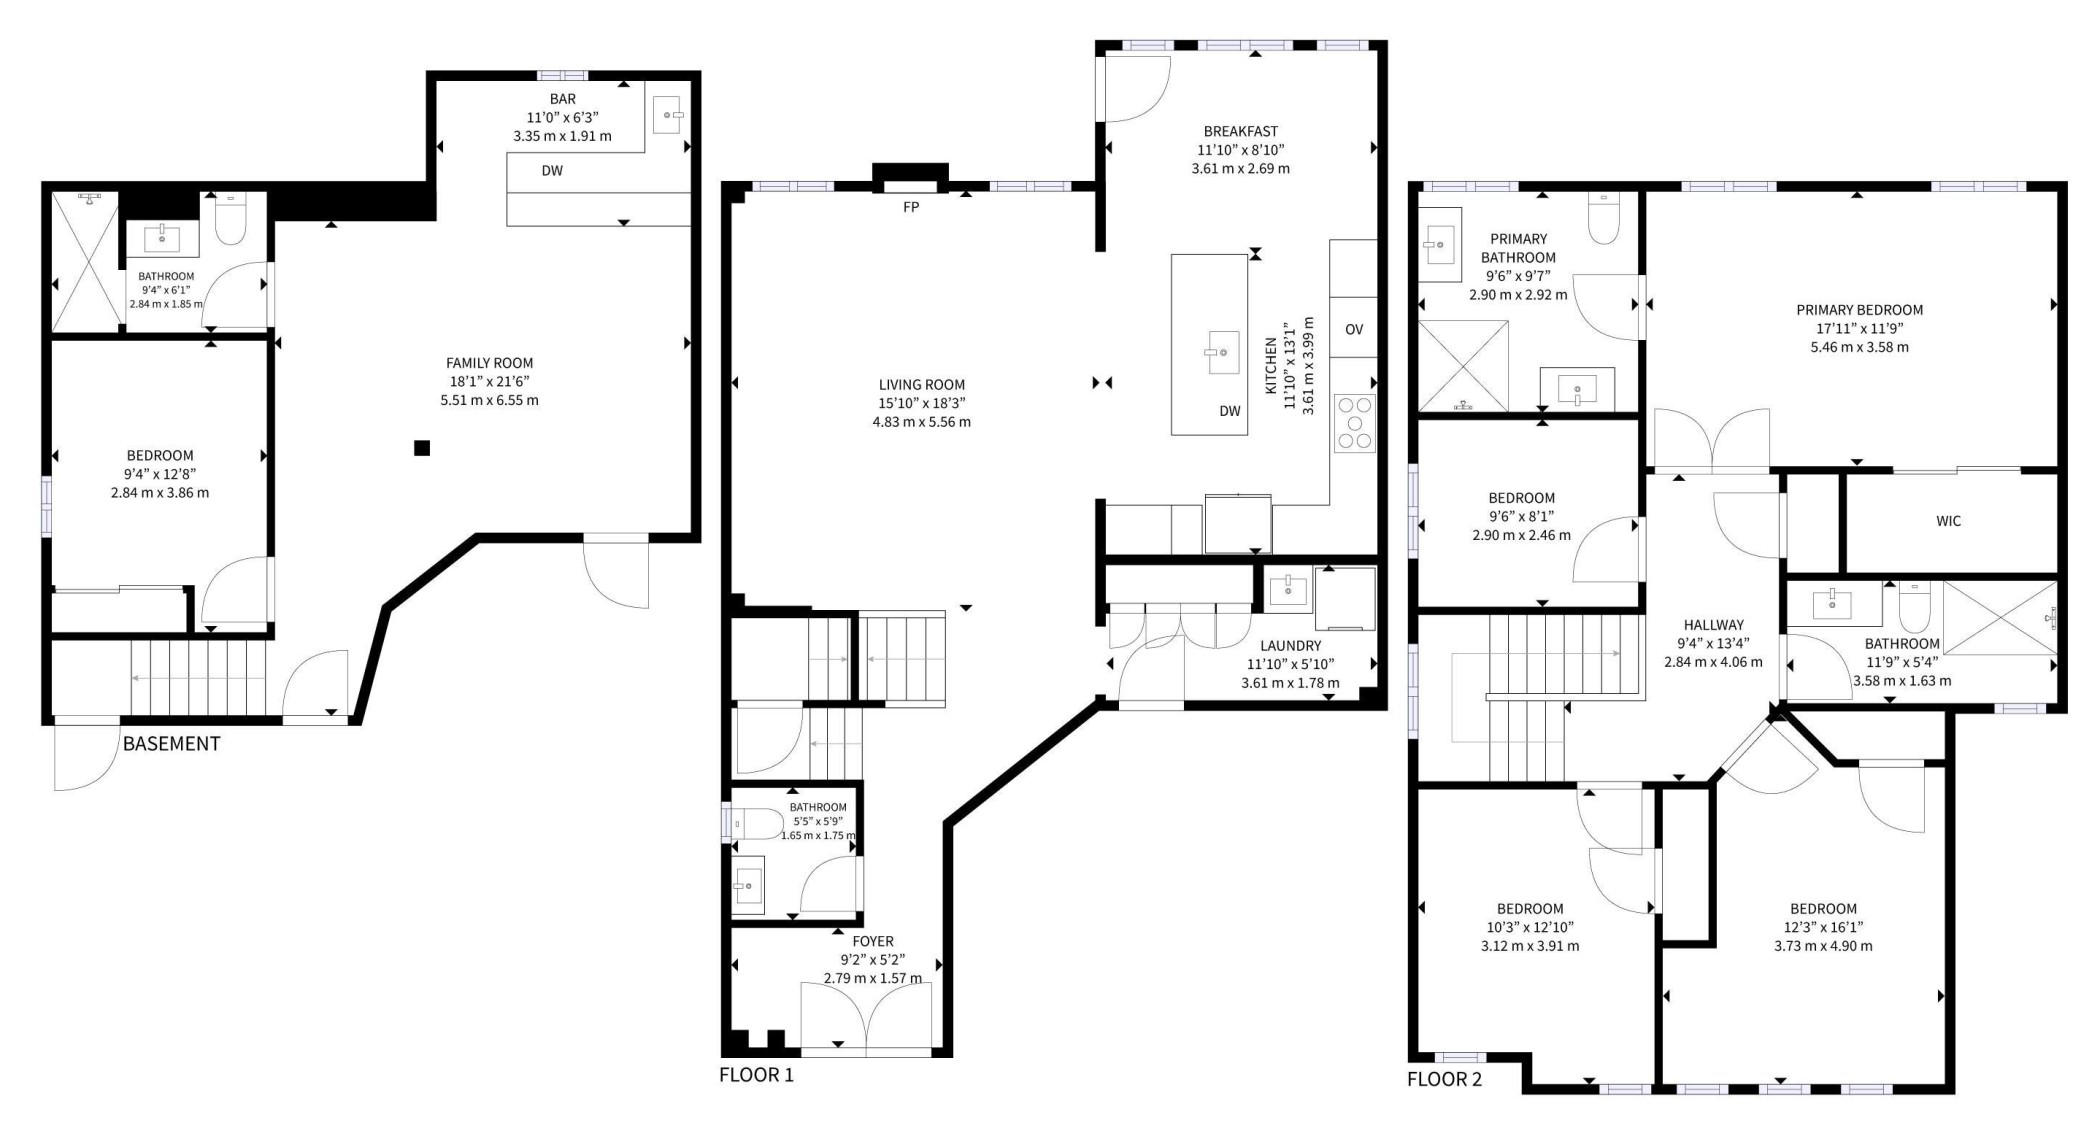 37 Booth Street - Floor Plans